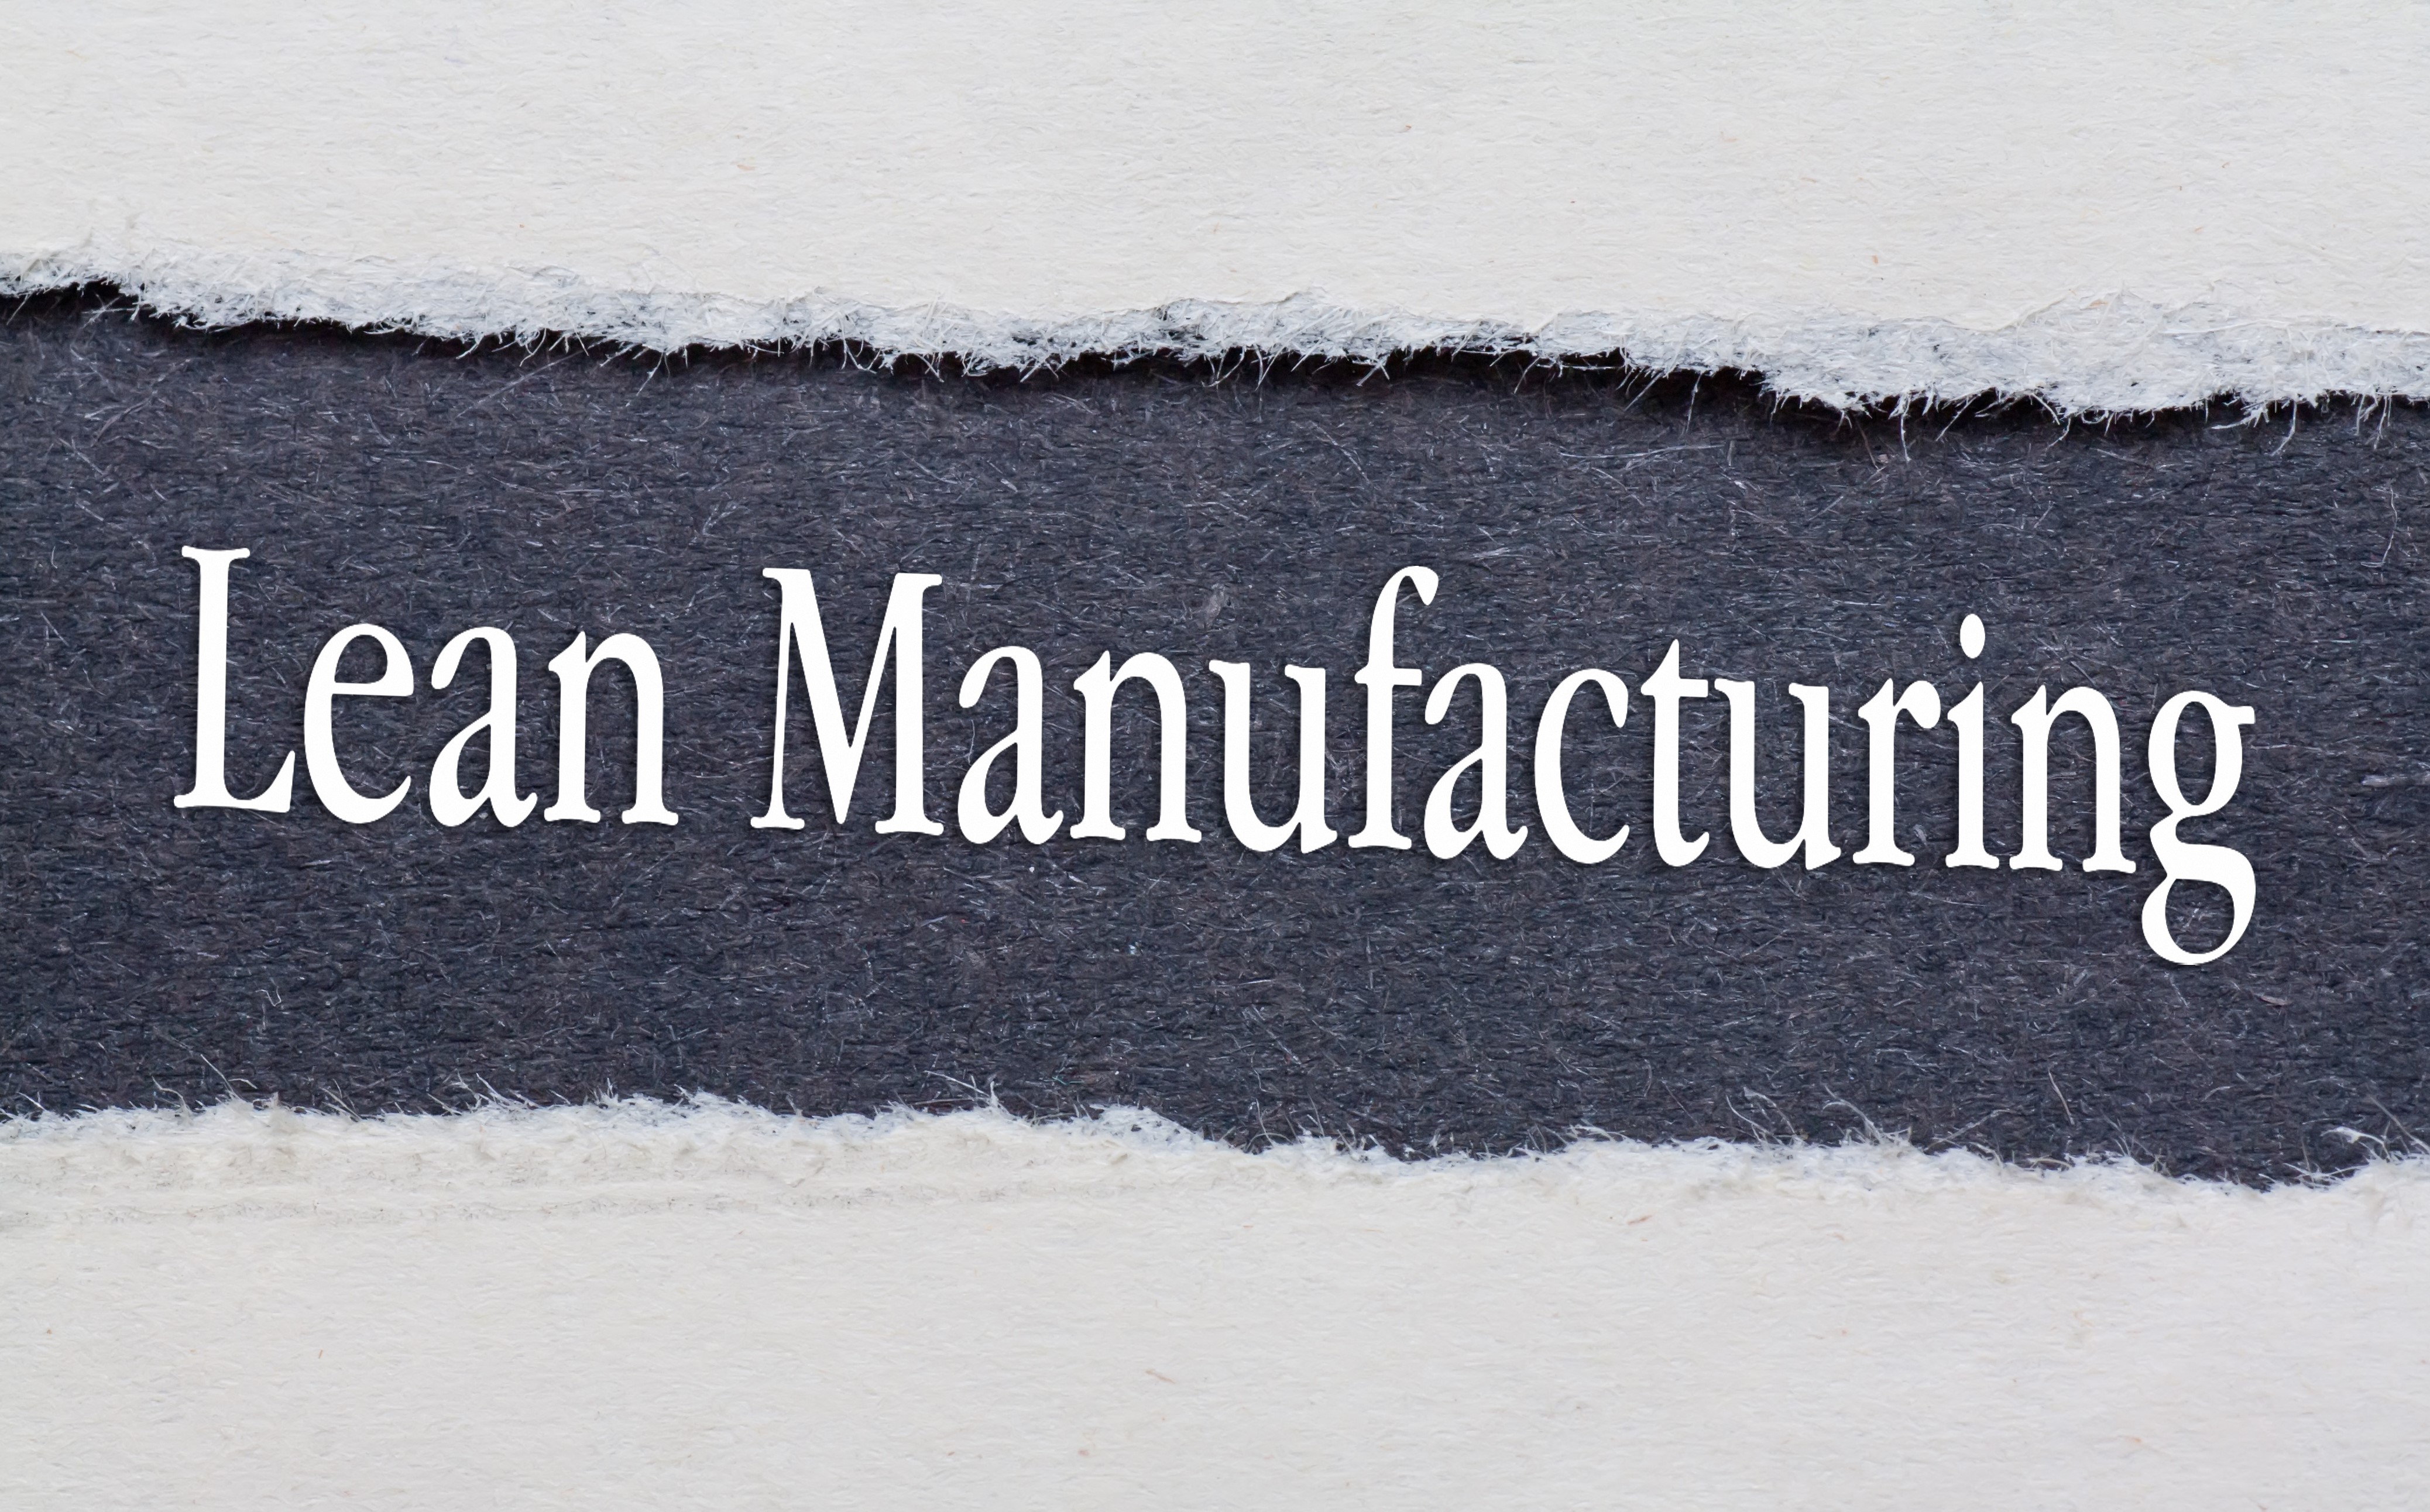 Lean Manufacturing Sign.jpg